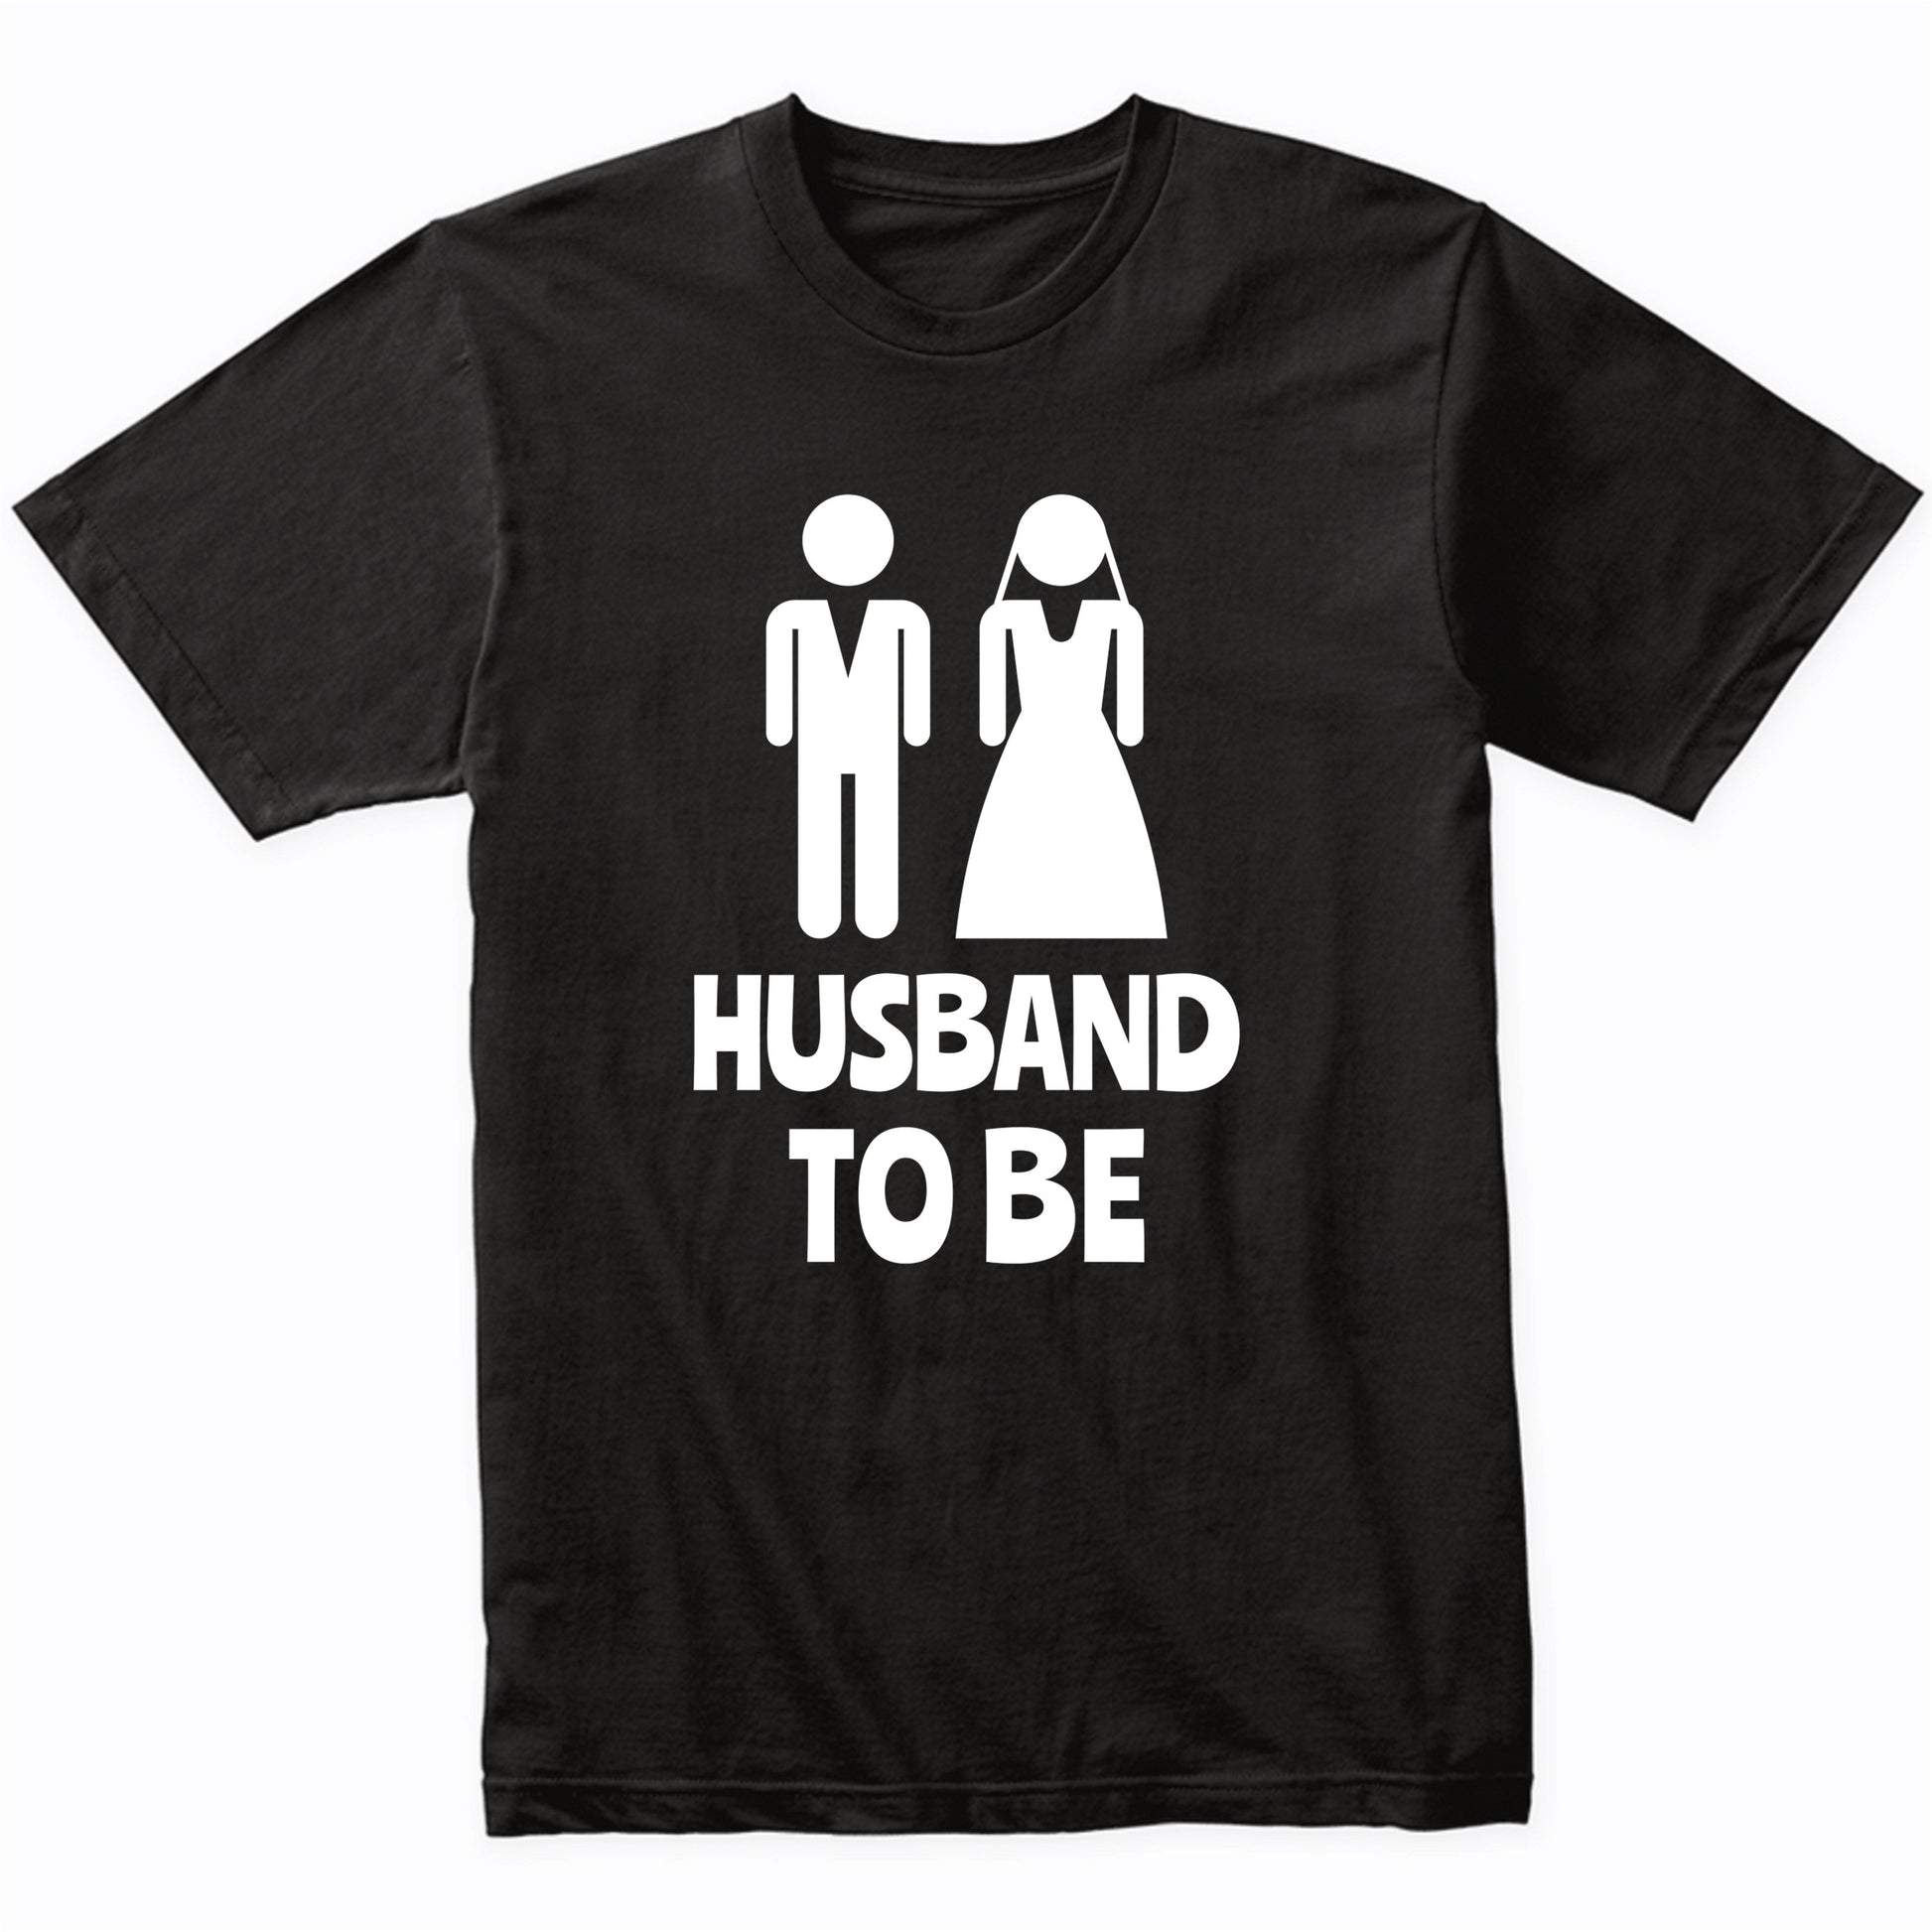 Husband To Be Shirt - Groom Wedding Party Shirt